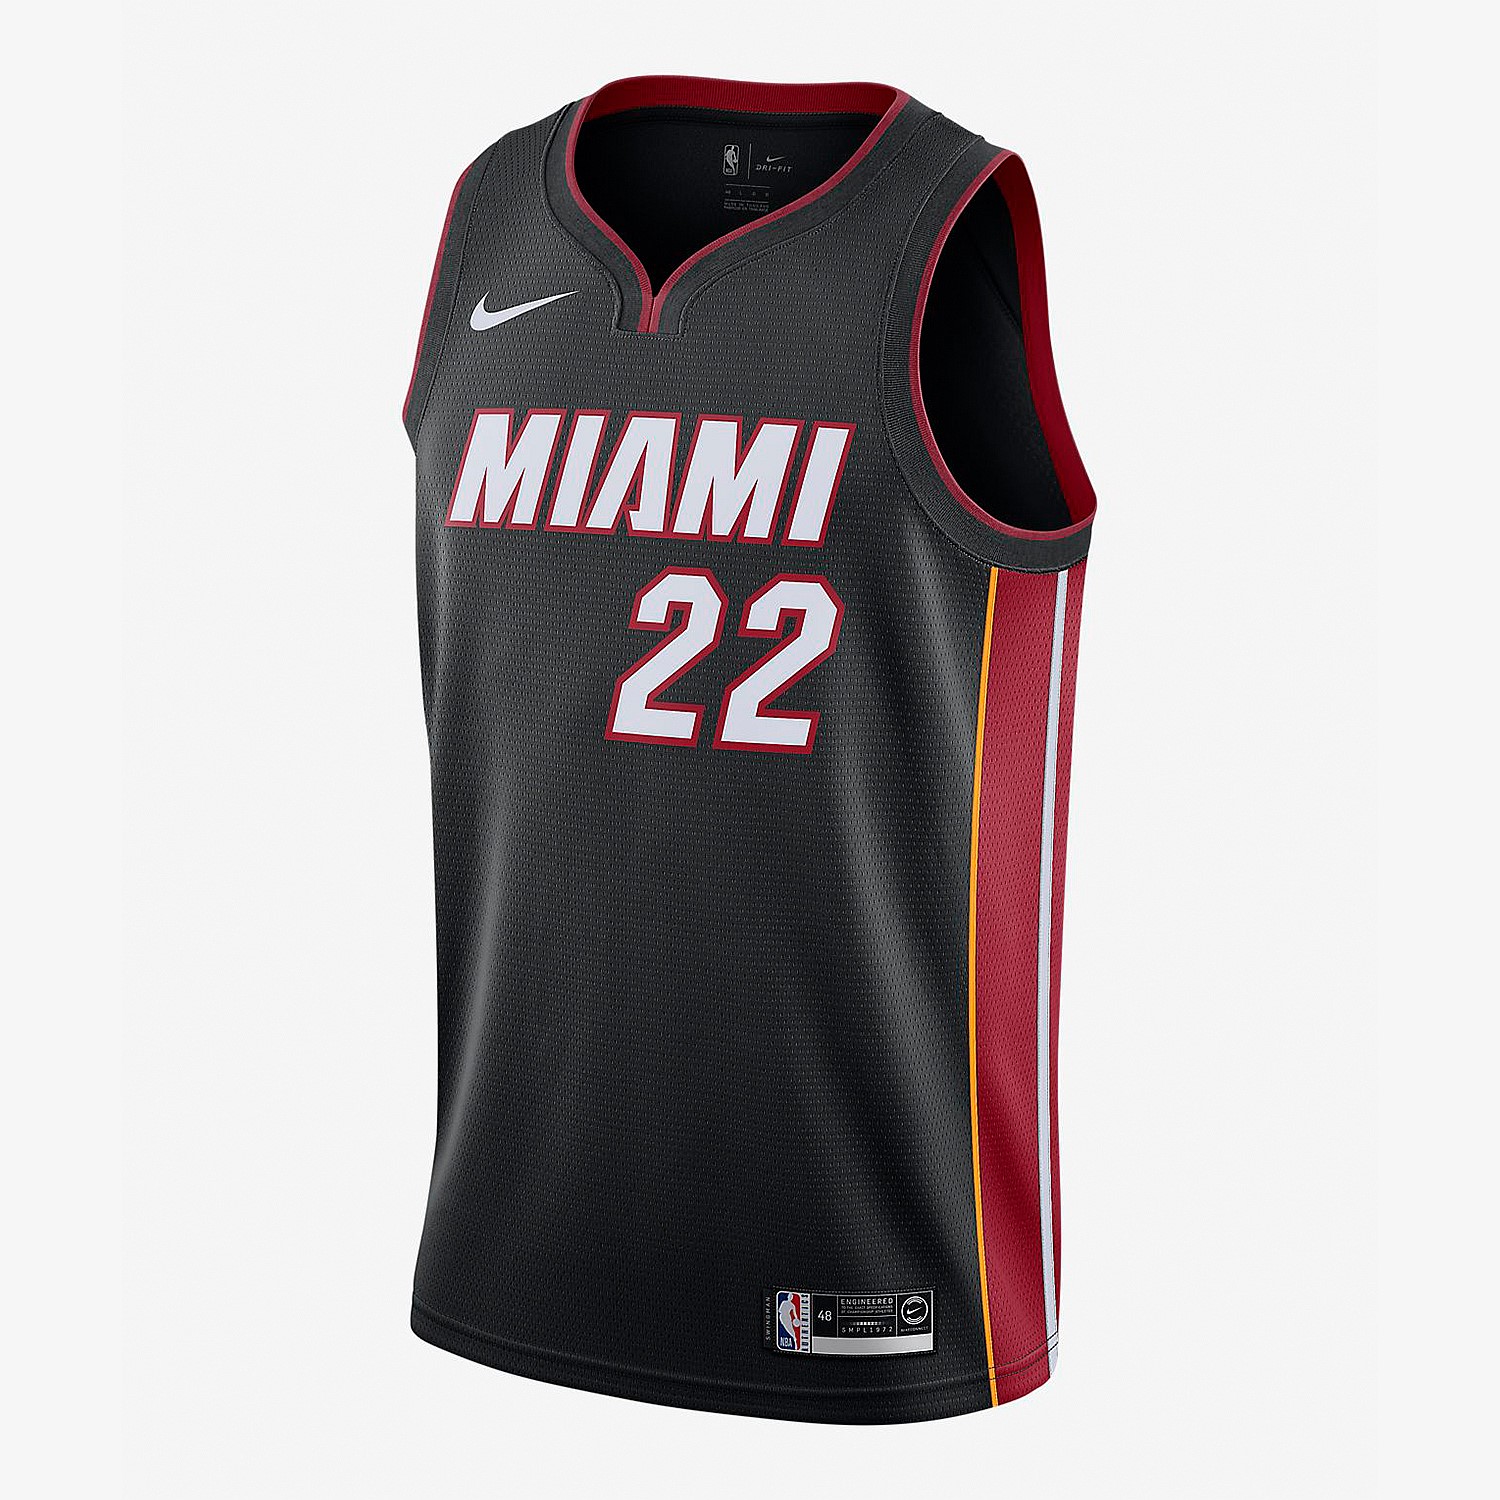 Stirling Sports - Miami Heat NBA Jersey 